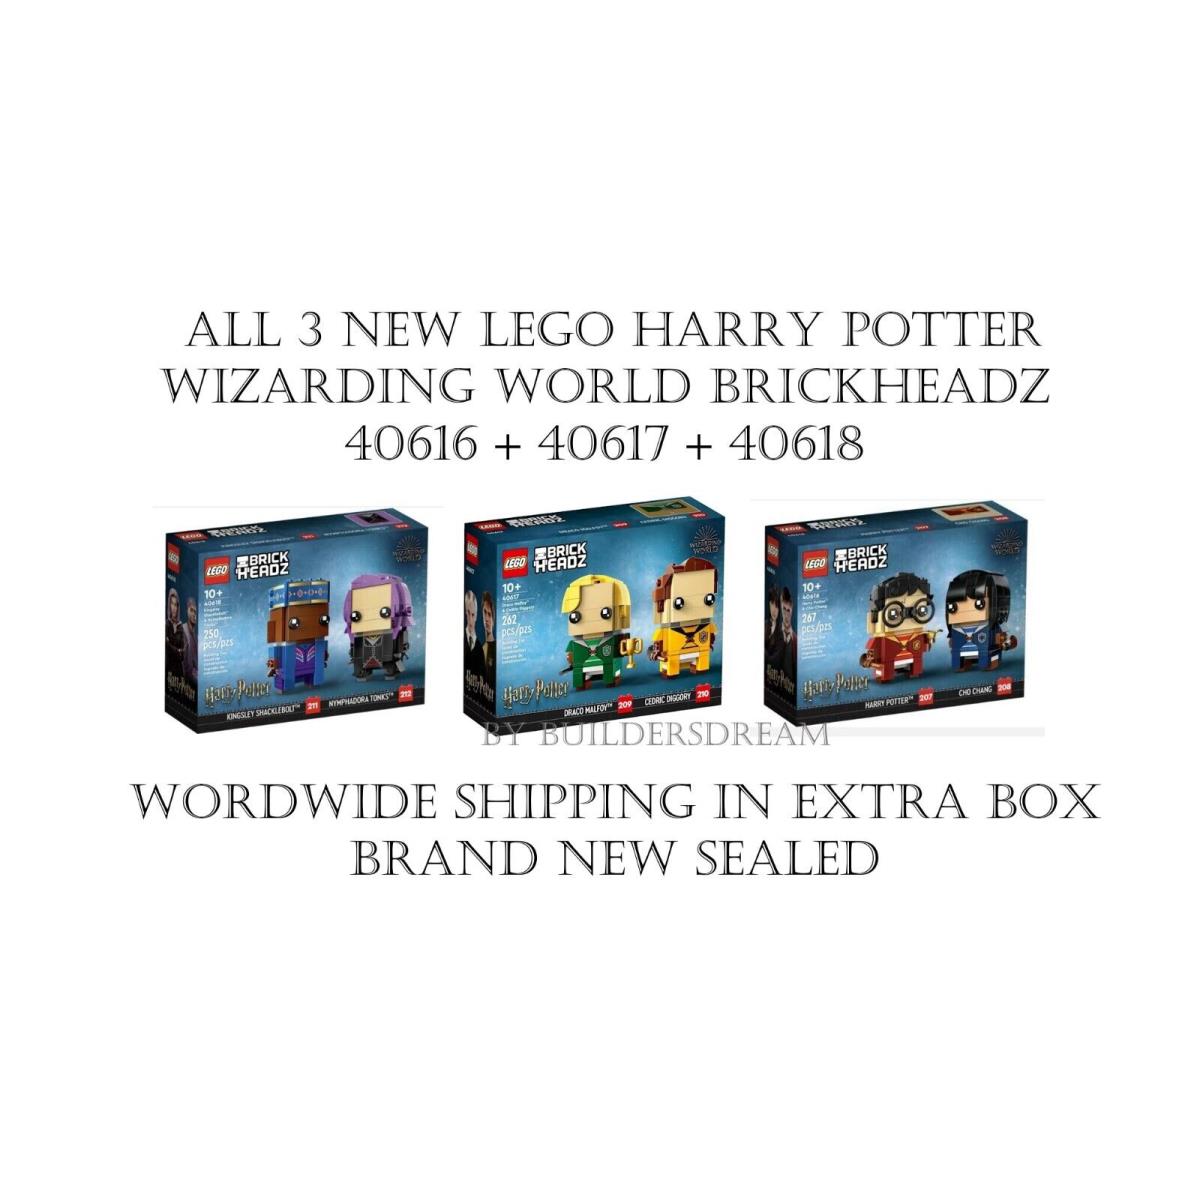 Lego 40616 + 40617 + 40618 Harry Potter Brickheadz Wizarding World